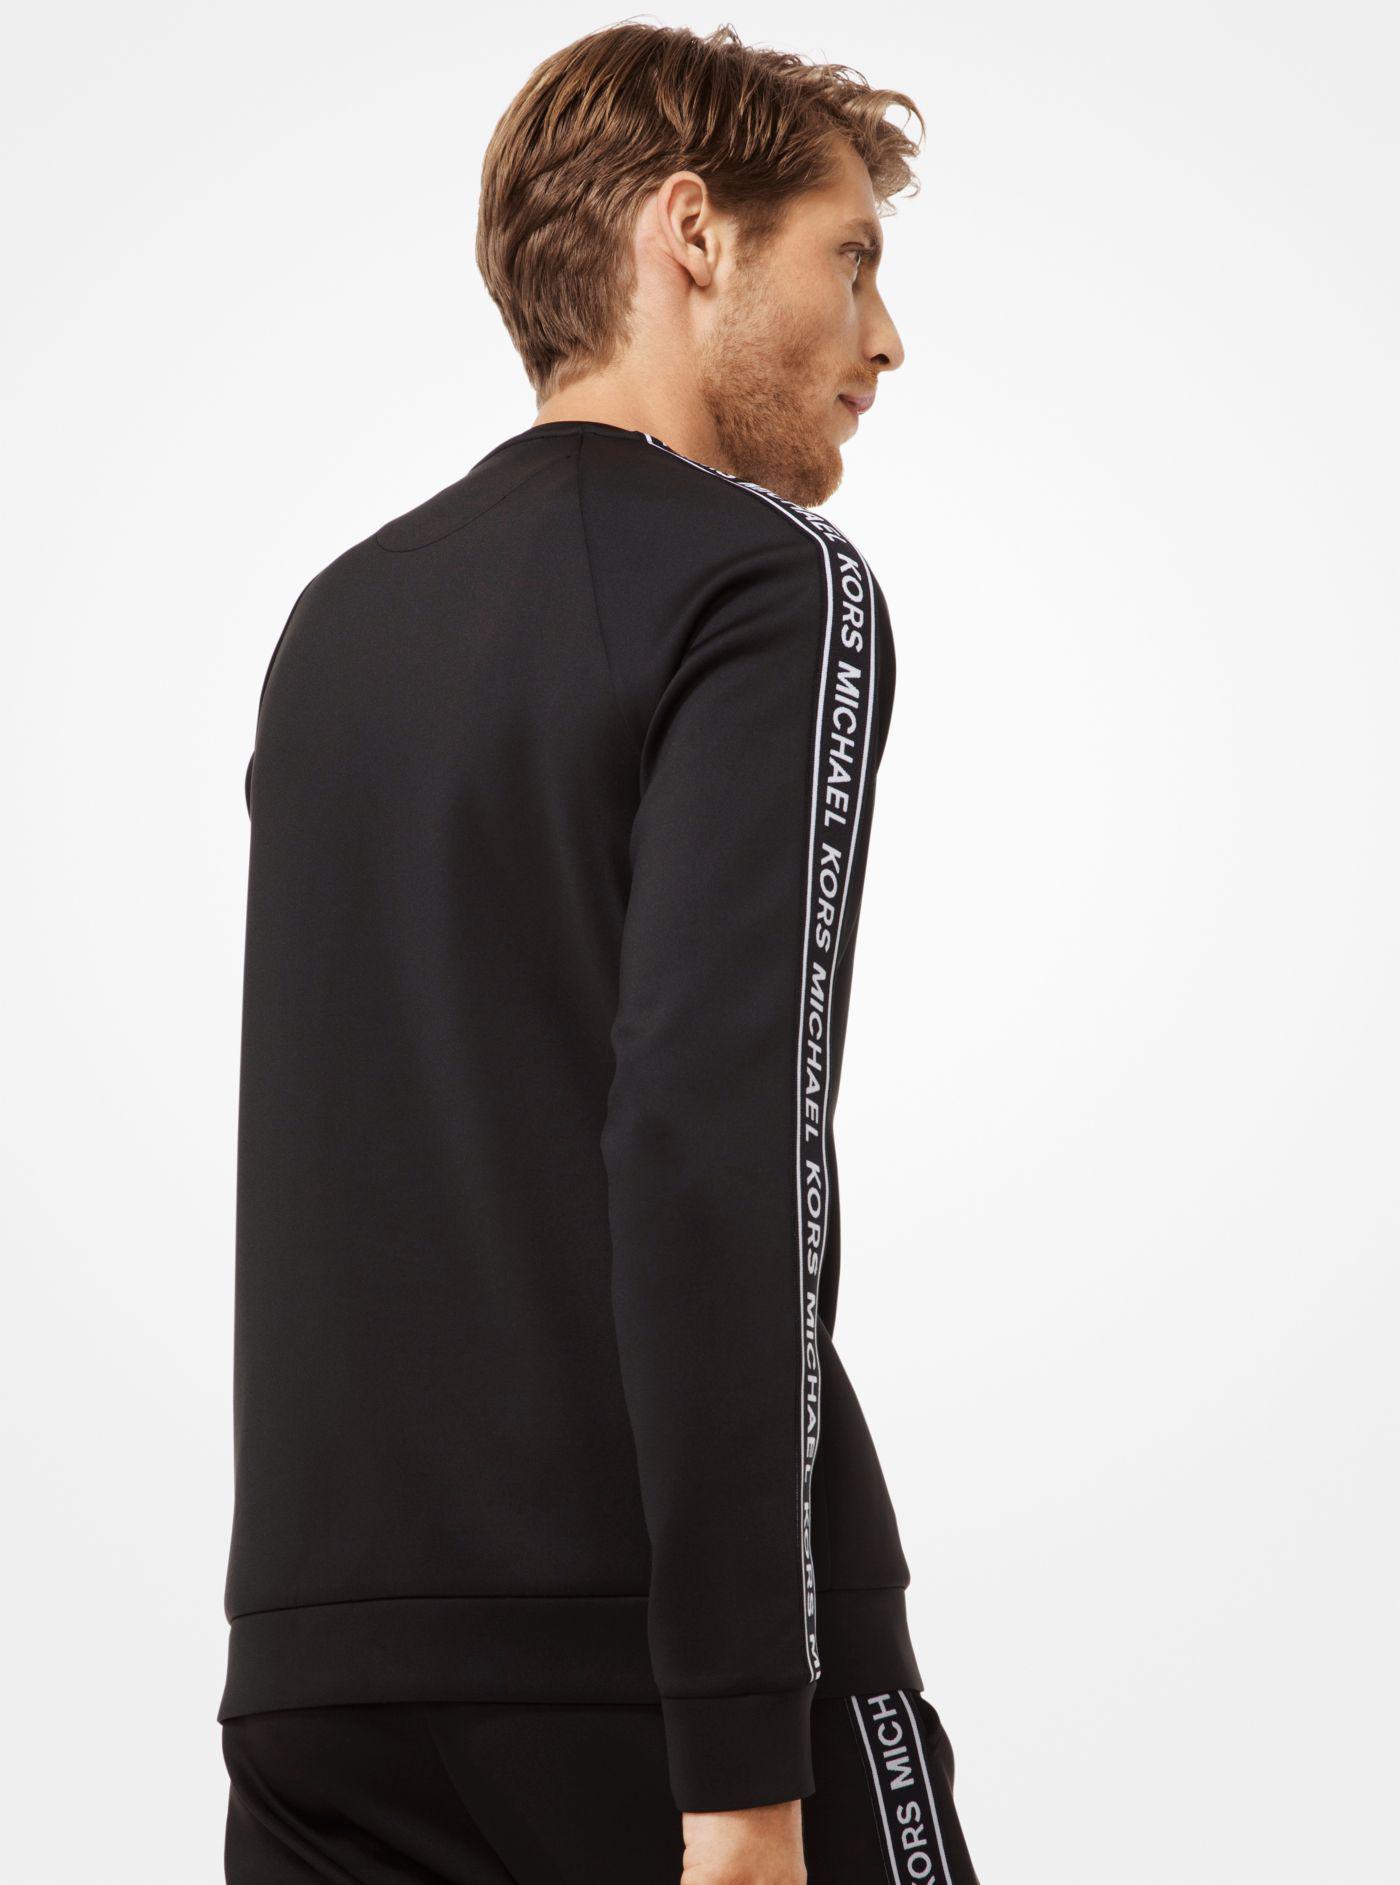 kærlighed Transportere Betjene Michael Kors Synthetic Scuba Logo Tape Sweatshirt in Black for Men - Lyst